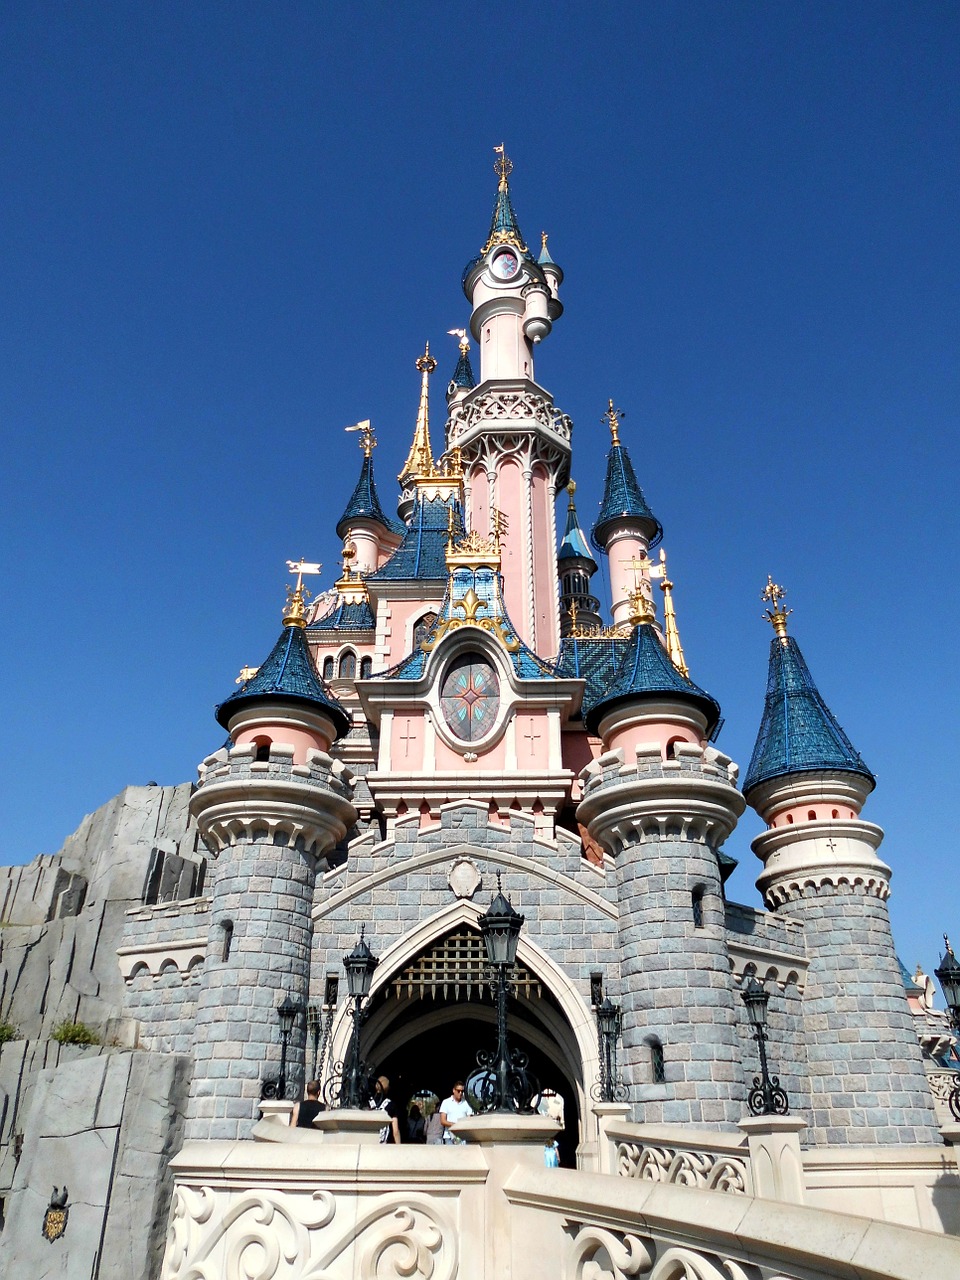 Download Free Photo Of Disneyland Sleeping Beauty Castle Paris Free Pictures From Needpix Com